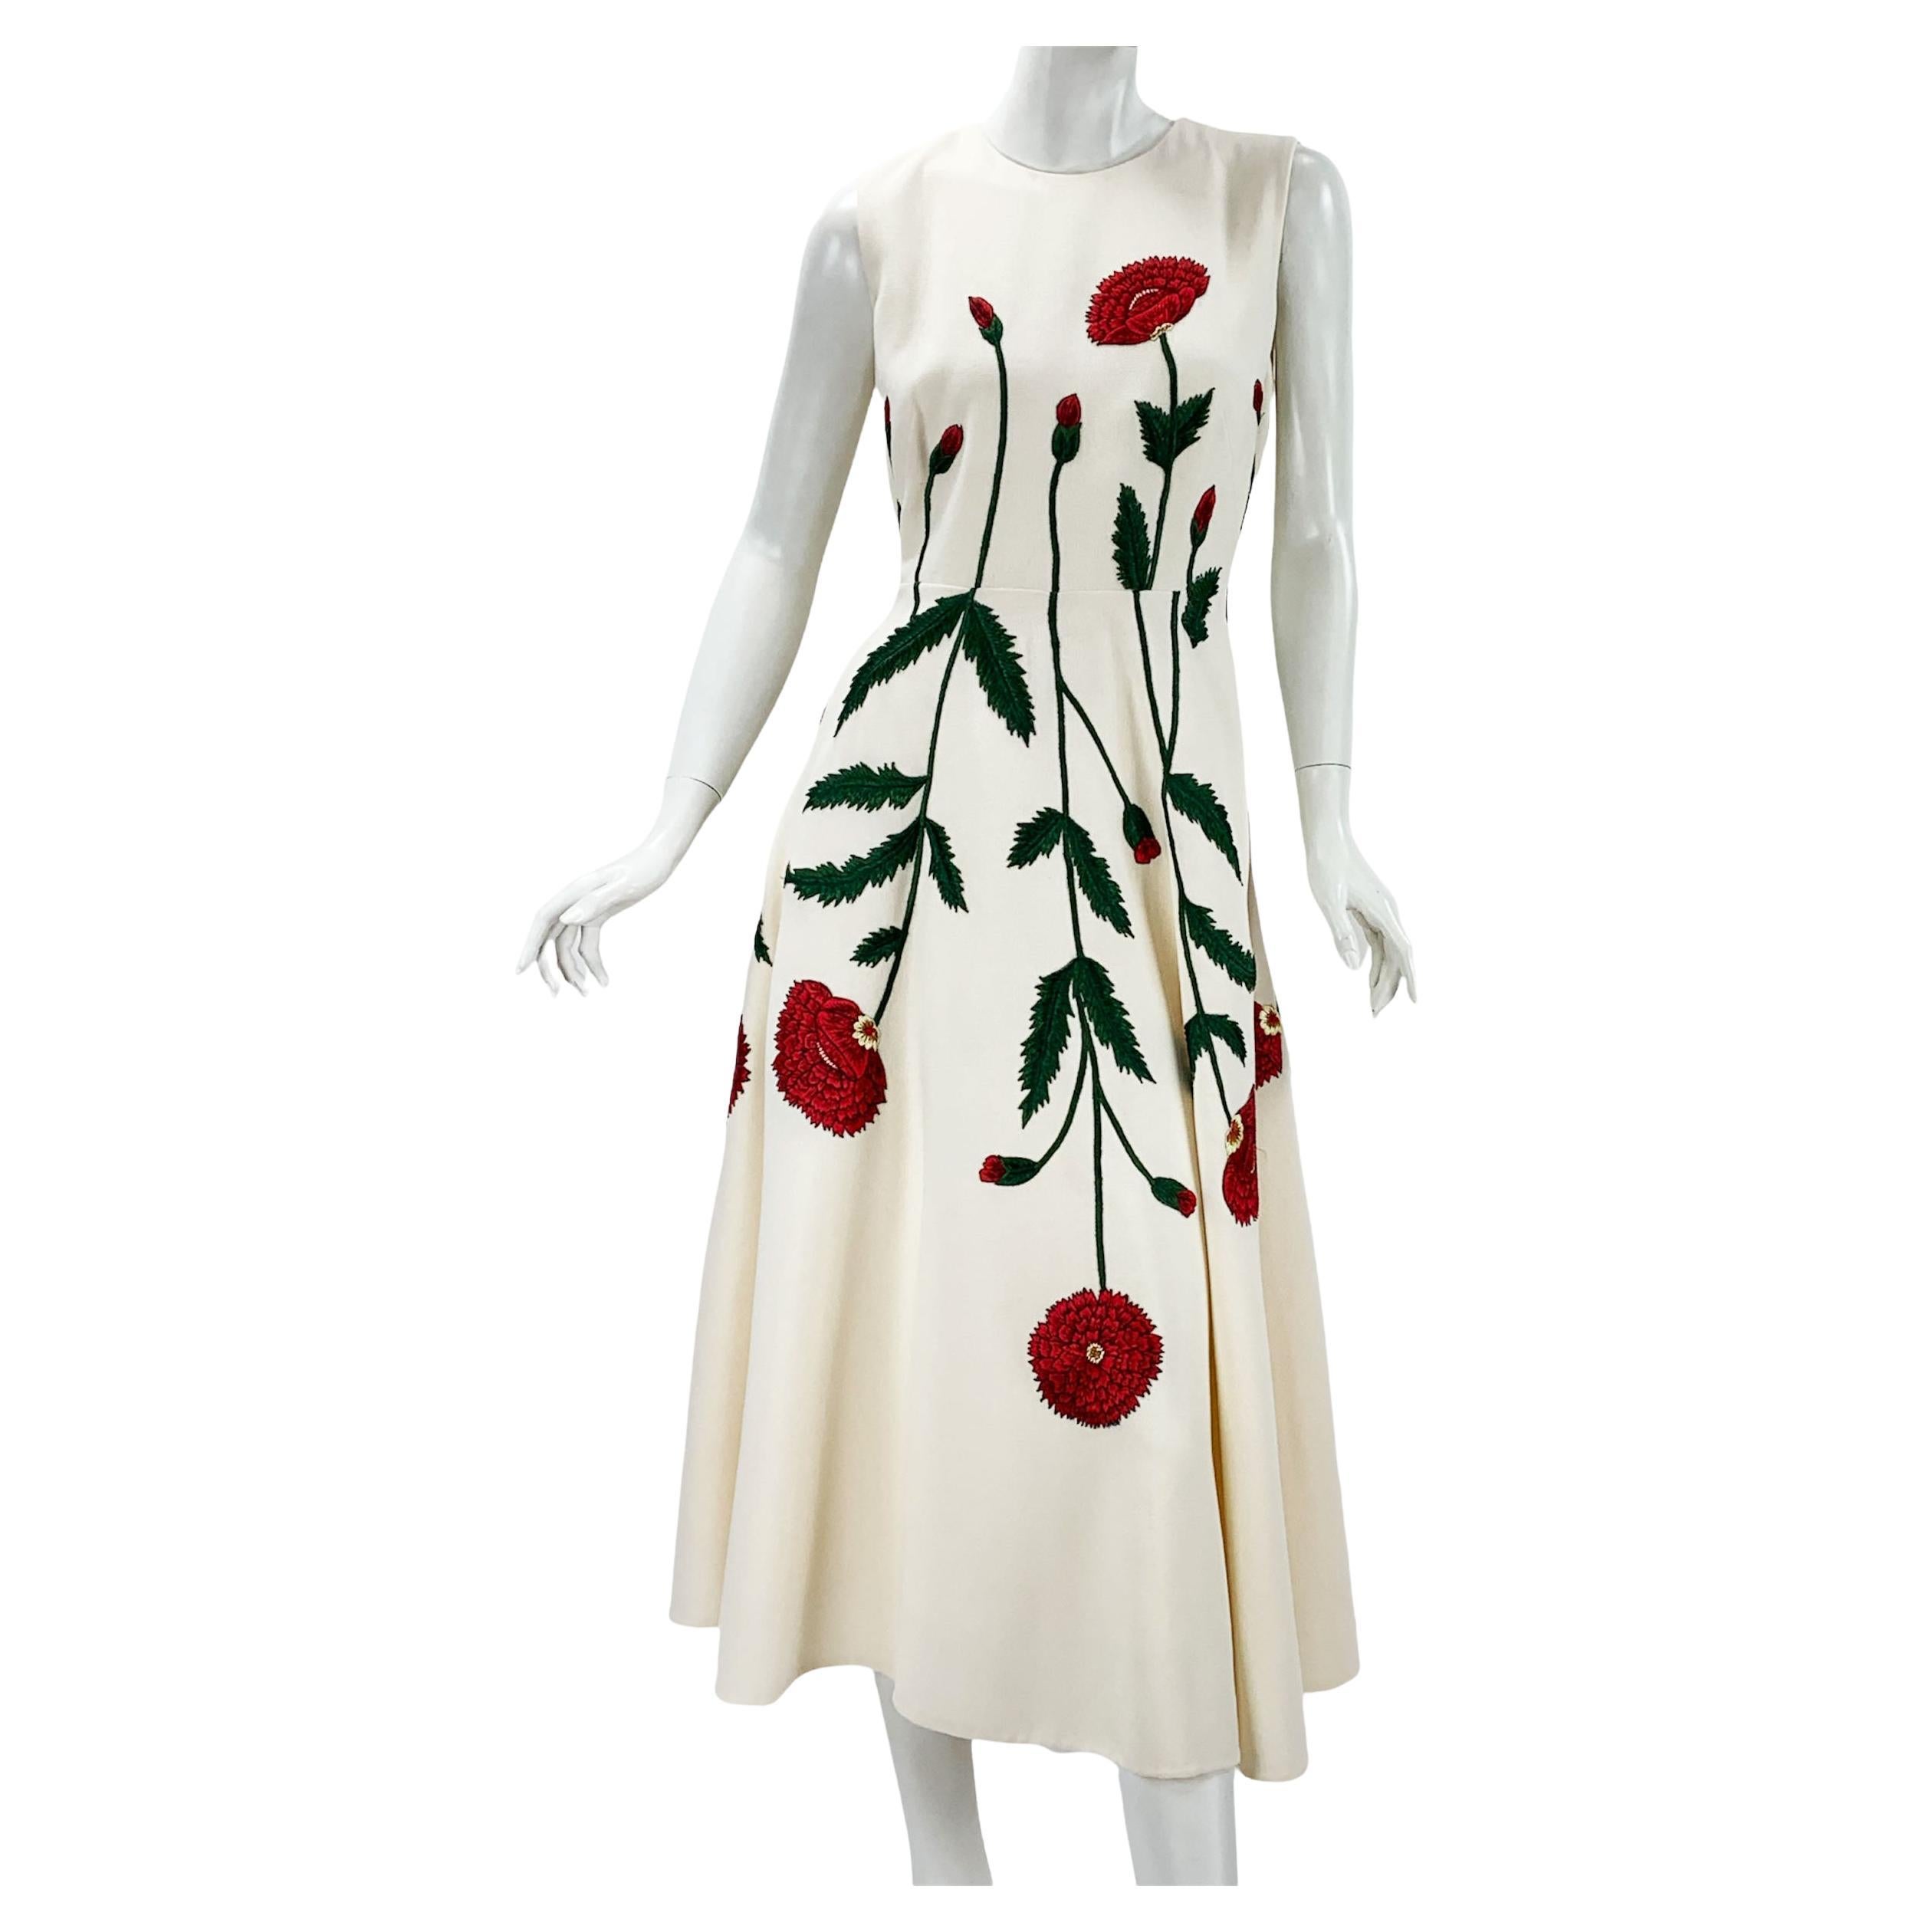 NWT Oscar de la Renta S/S 2019 Poppy Embroidered Stretch-Wool Crepe Dress US 10 For Sale